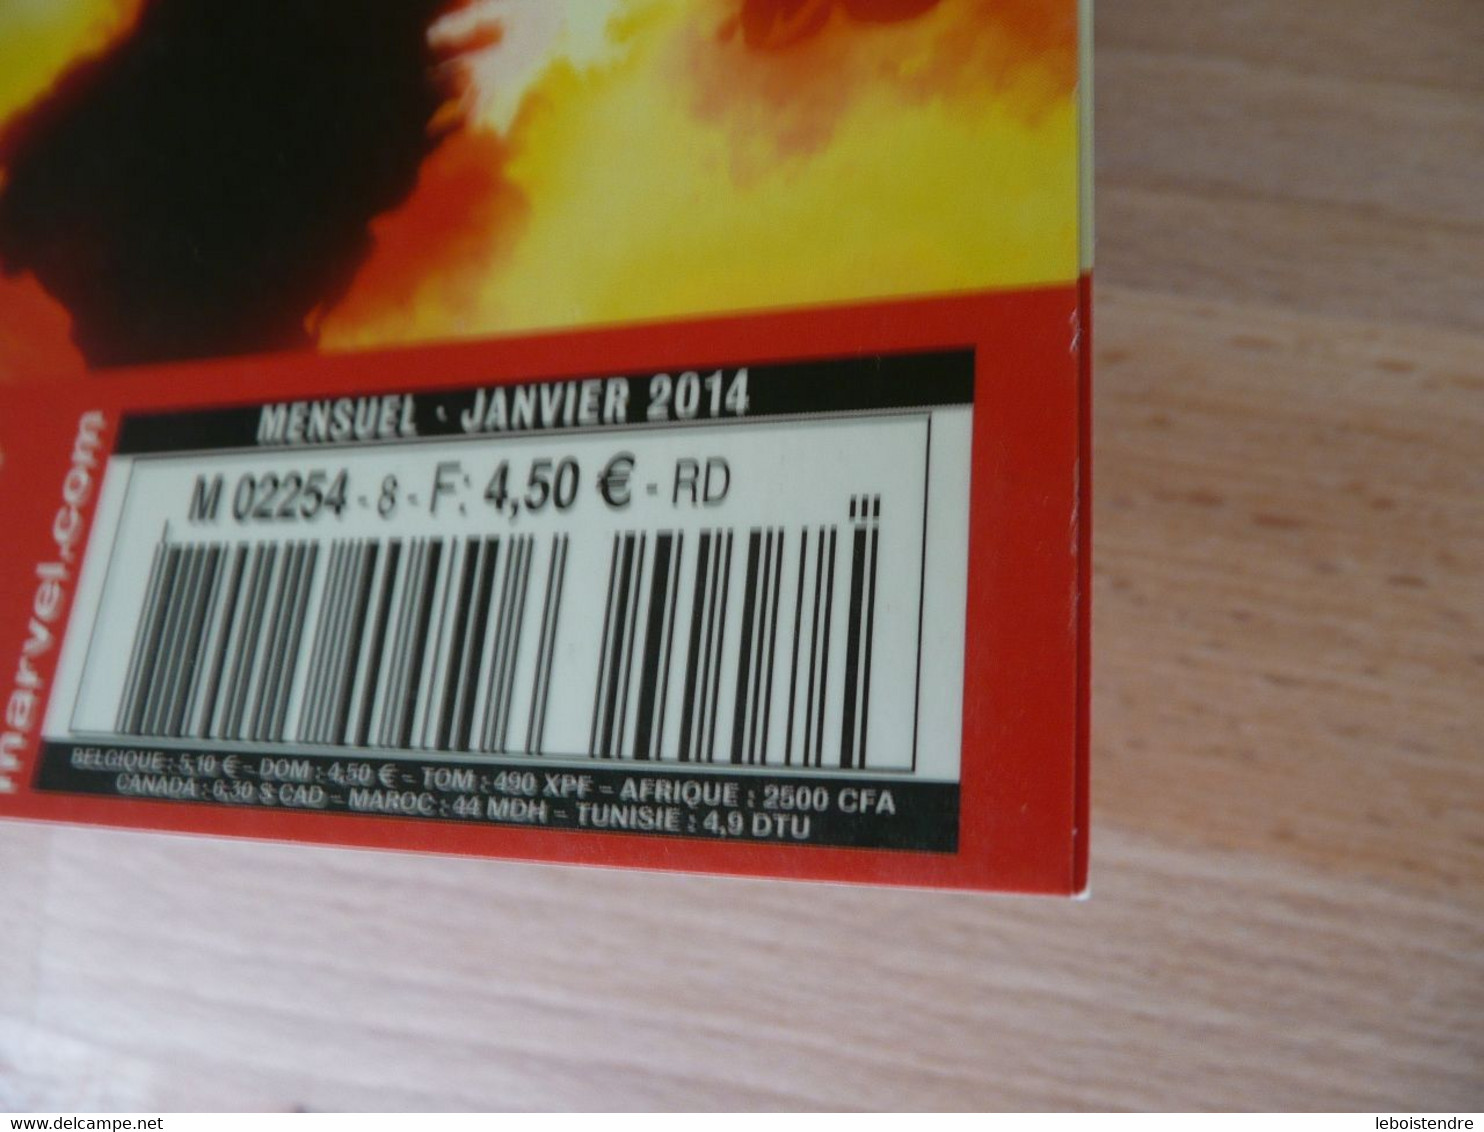 UNCANNY AVENGERS N 8 JANVIER 2014 JOIN THE REVOLUTION  MARVEL NOW ! PANINI COMICS TRES BON ETAT - Marvel France